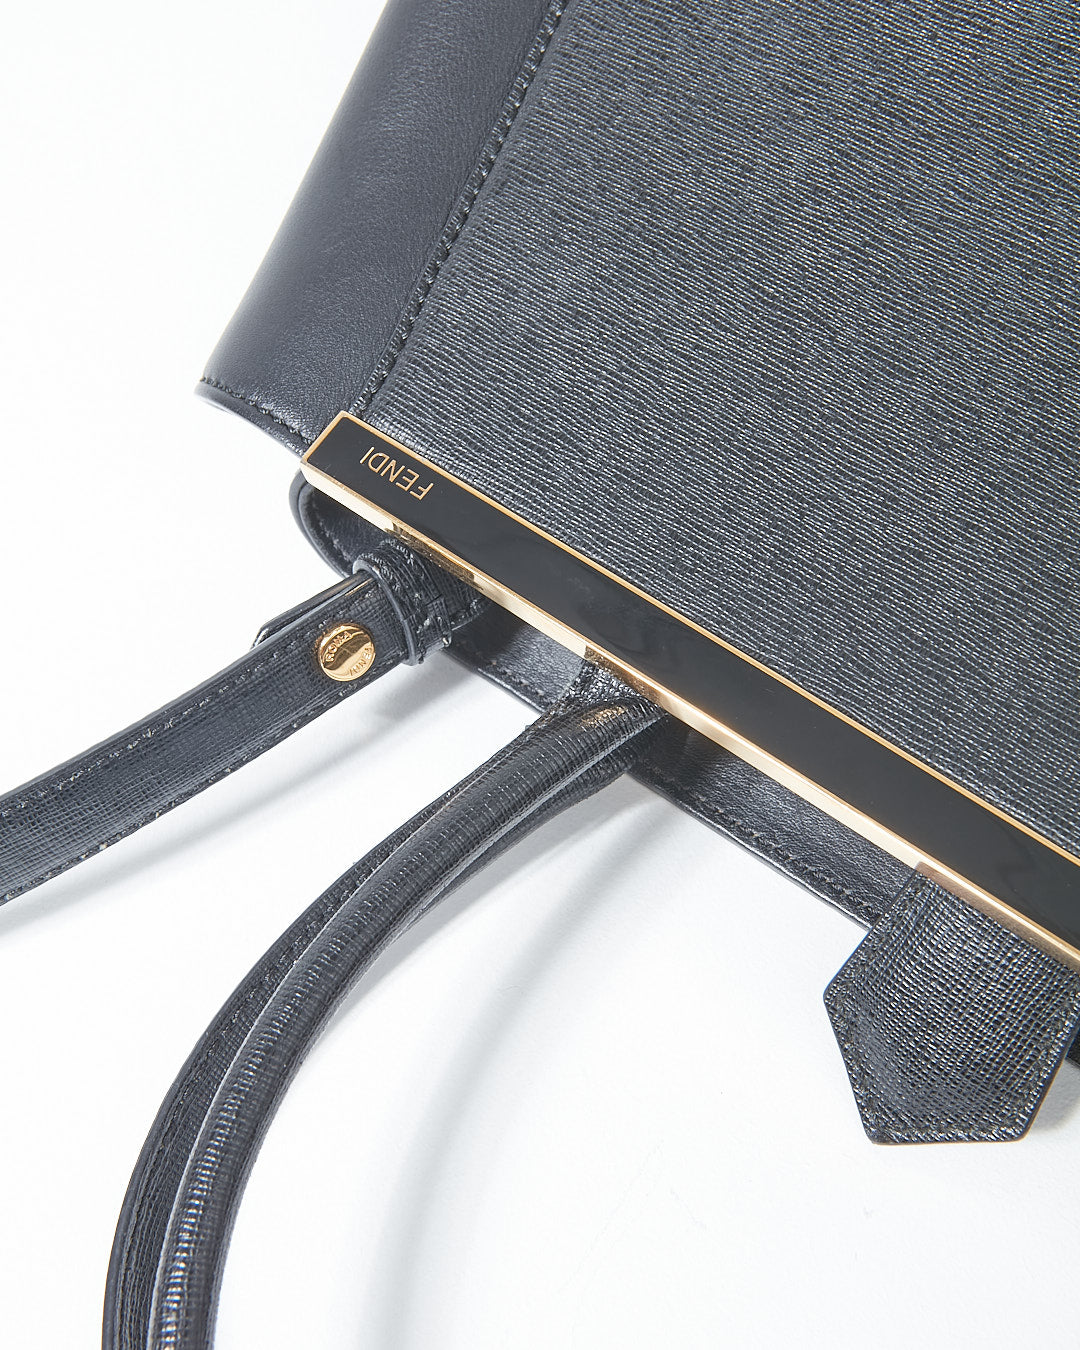 Fendi Black Leather Medium 2Jours Elite Tote Bag